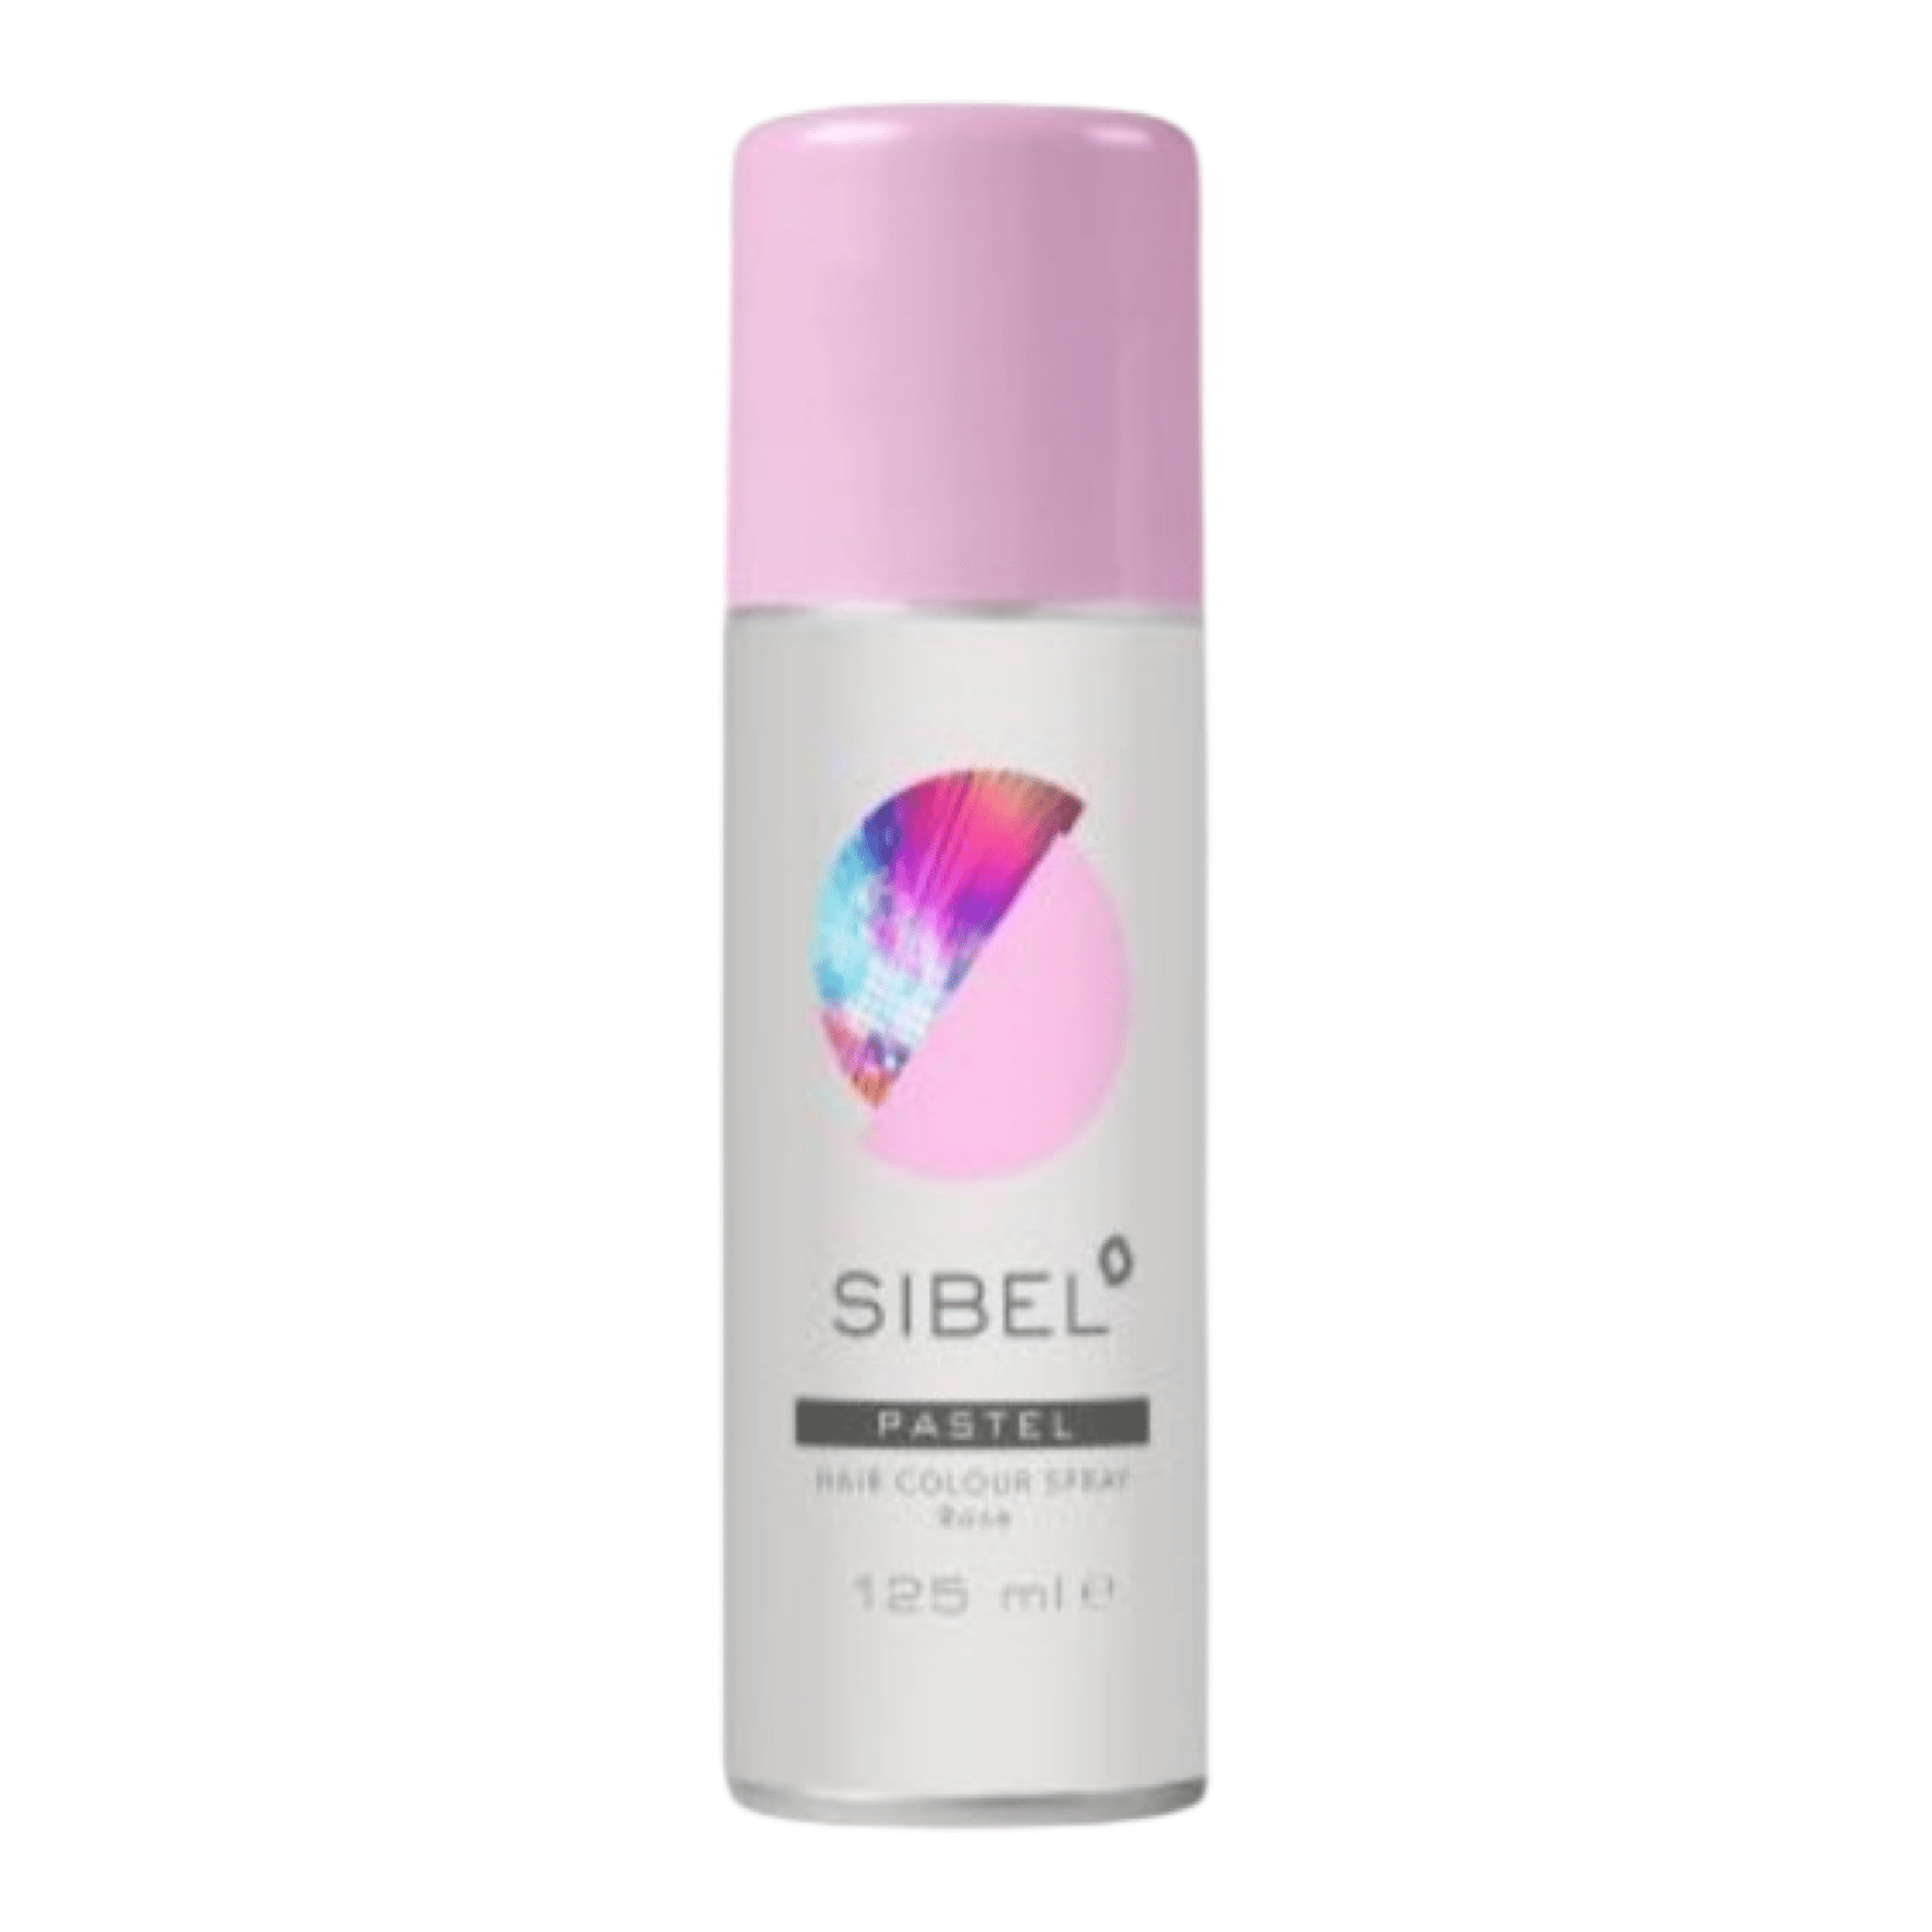 Sibel - color spray pastel rose 125 ml - Merle og Wilde